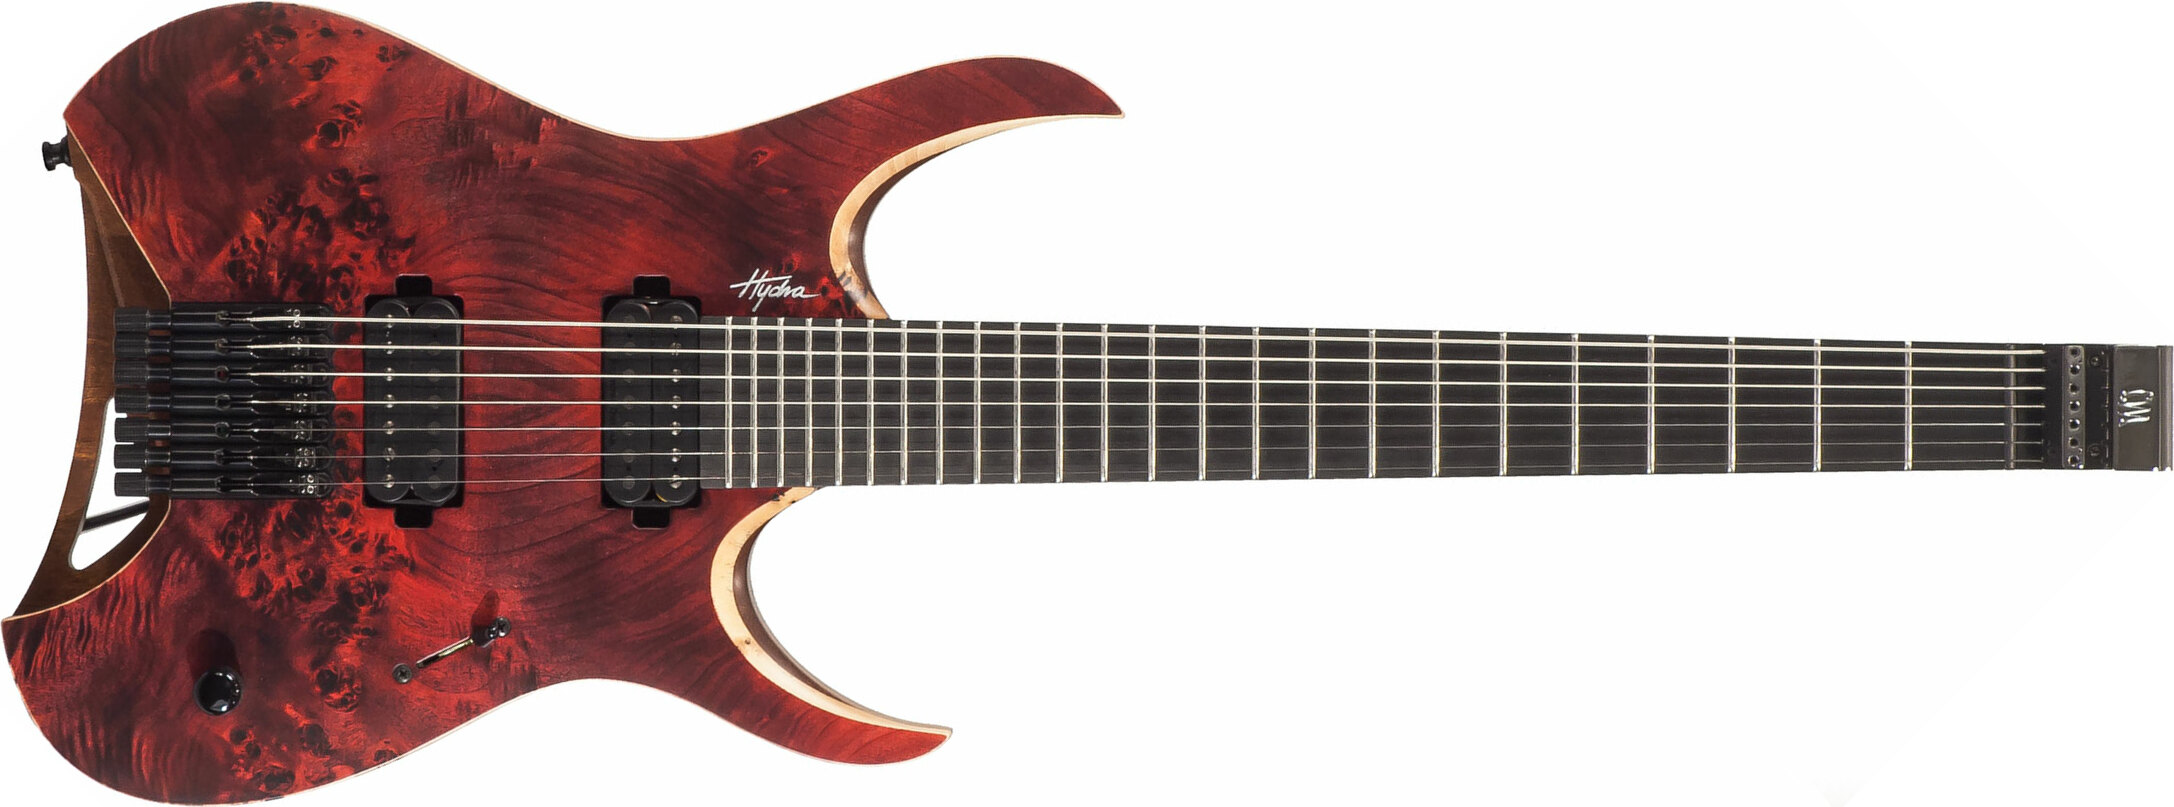 Mayones Guitars Hydra Elite 7 2h Seymour Duncan Ht Eb - Dirty Red Satin - 7-saitige E-Gitarre - Main picture